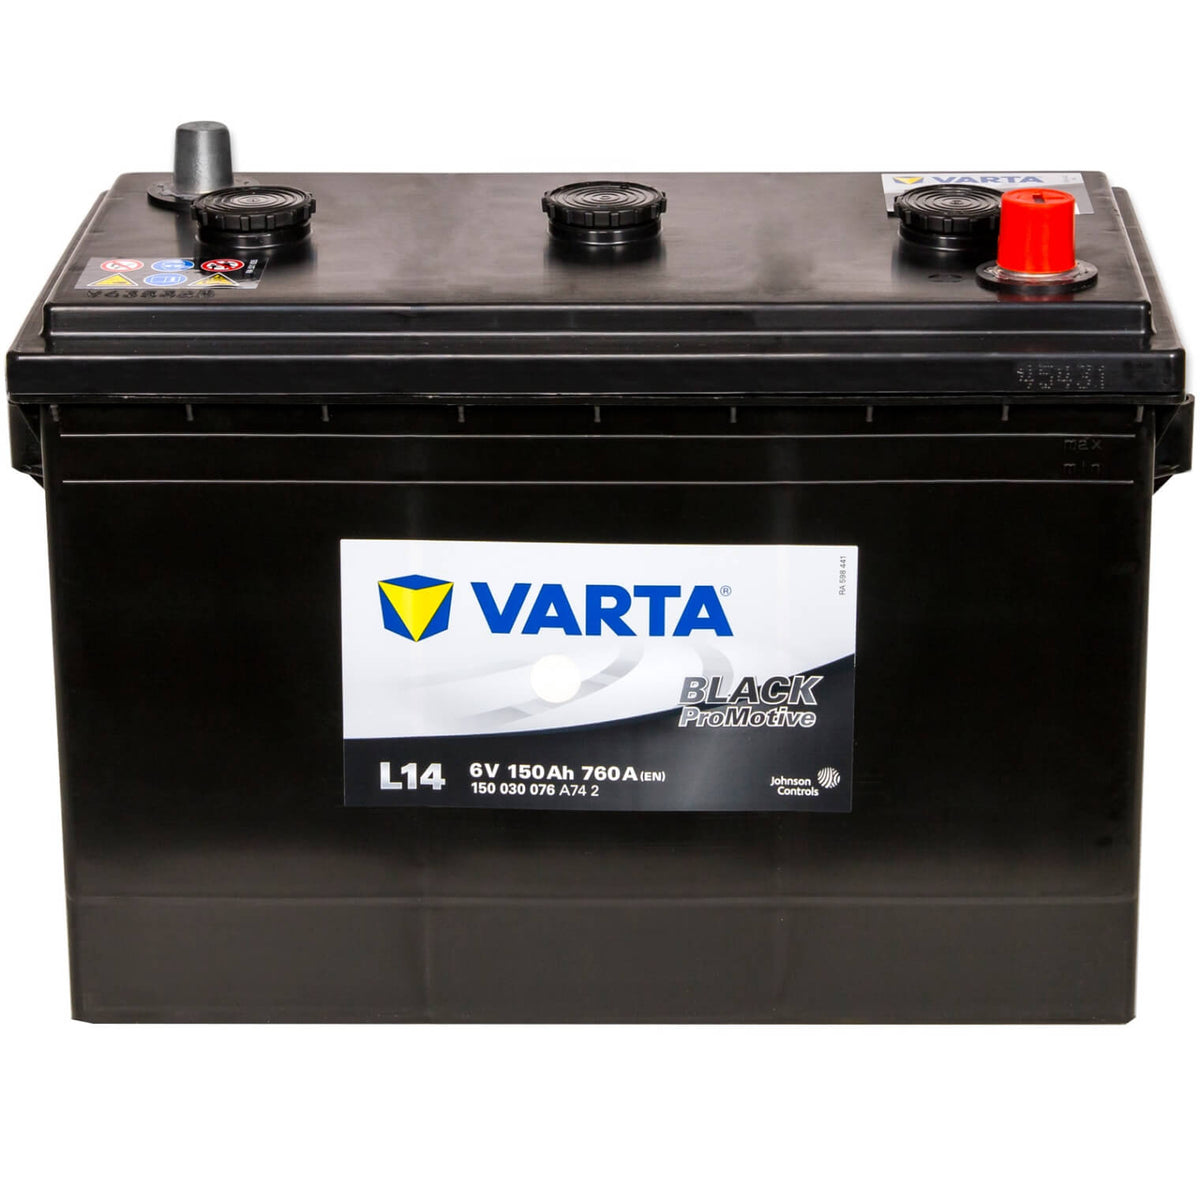 Varta L14 Promotive Black 6V 150Ah 760A/EN